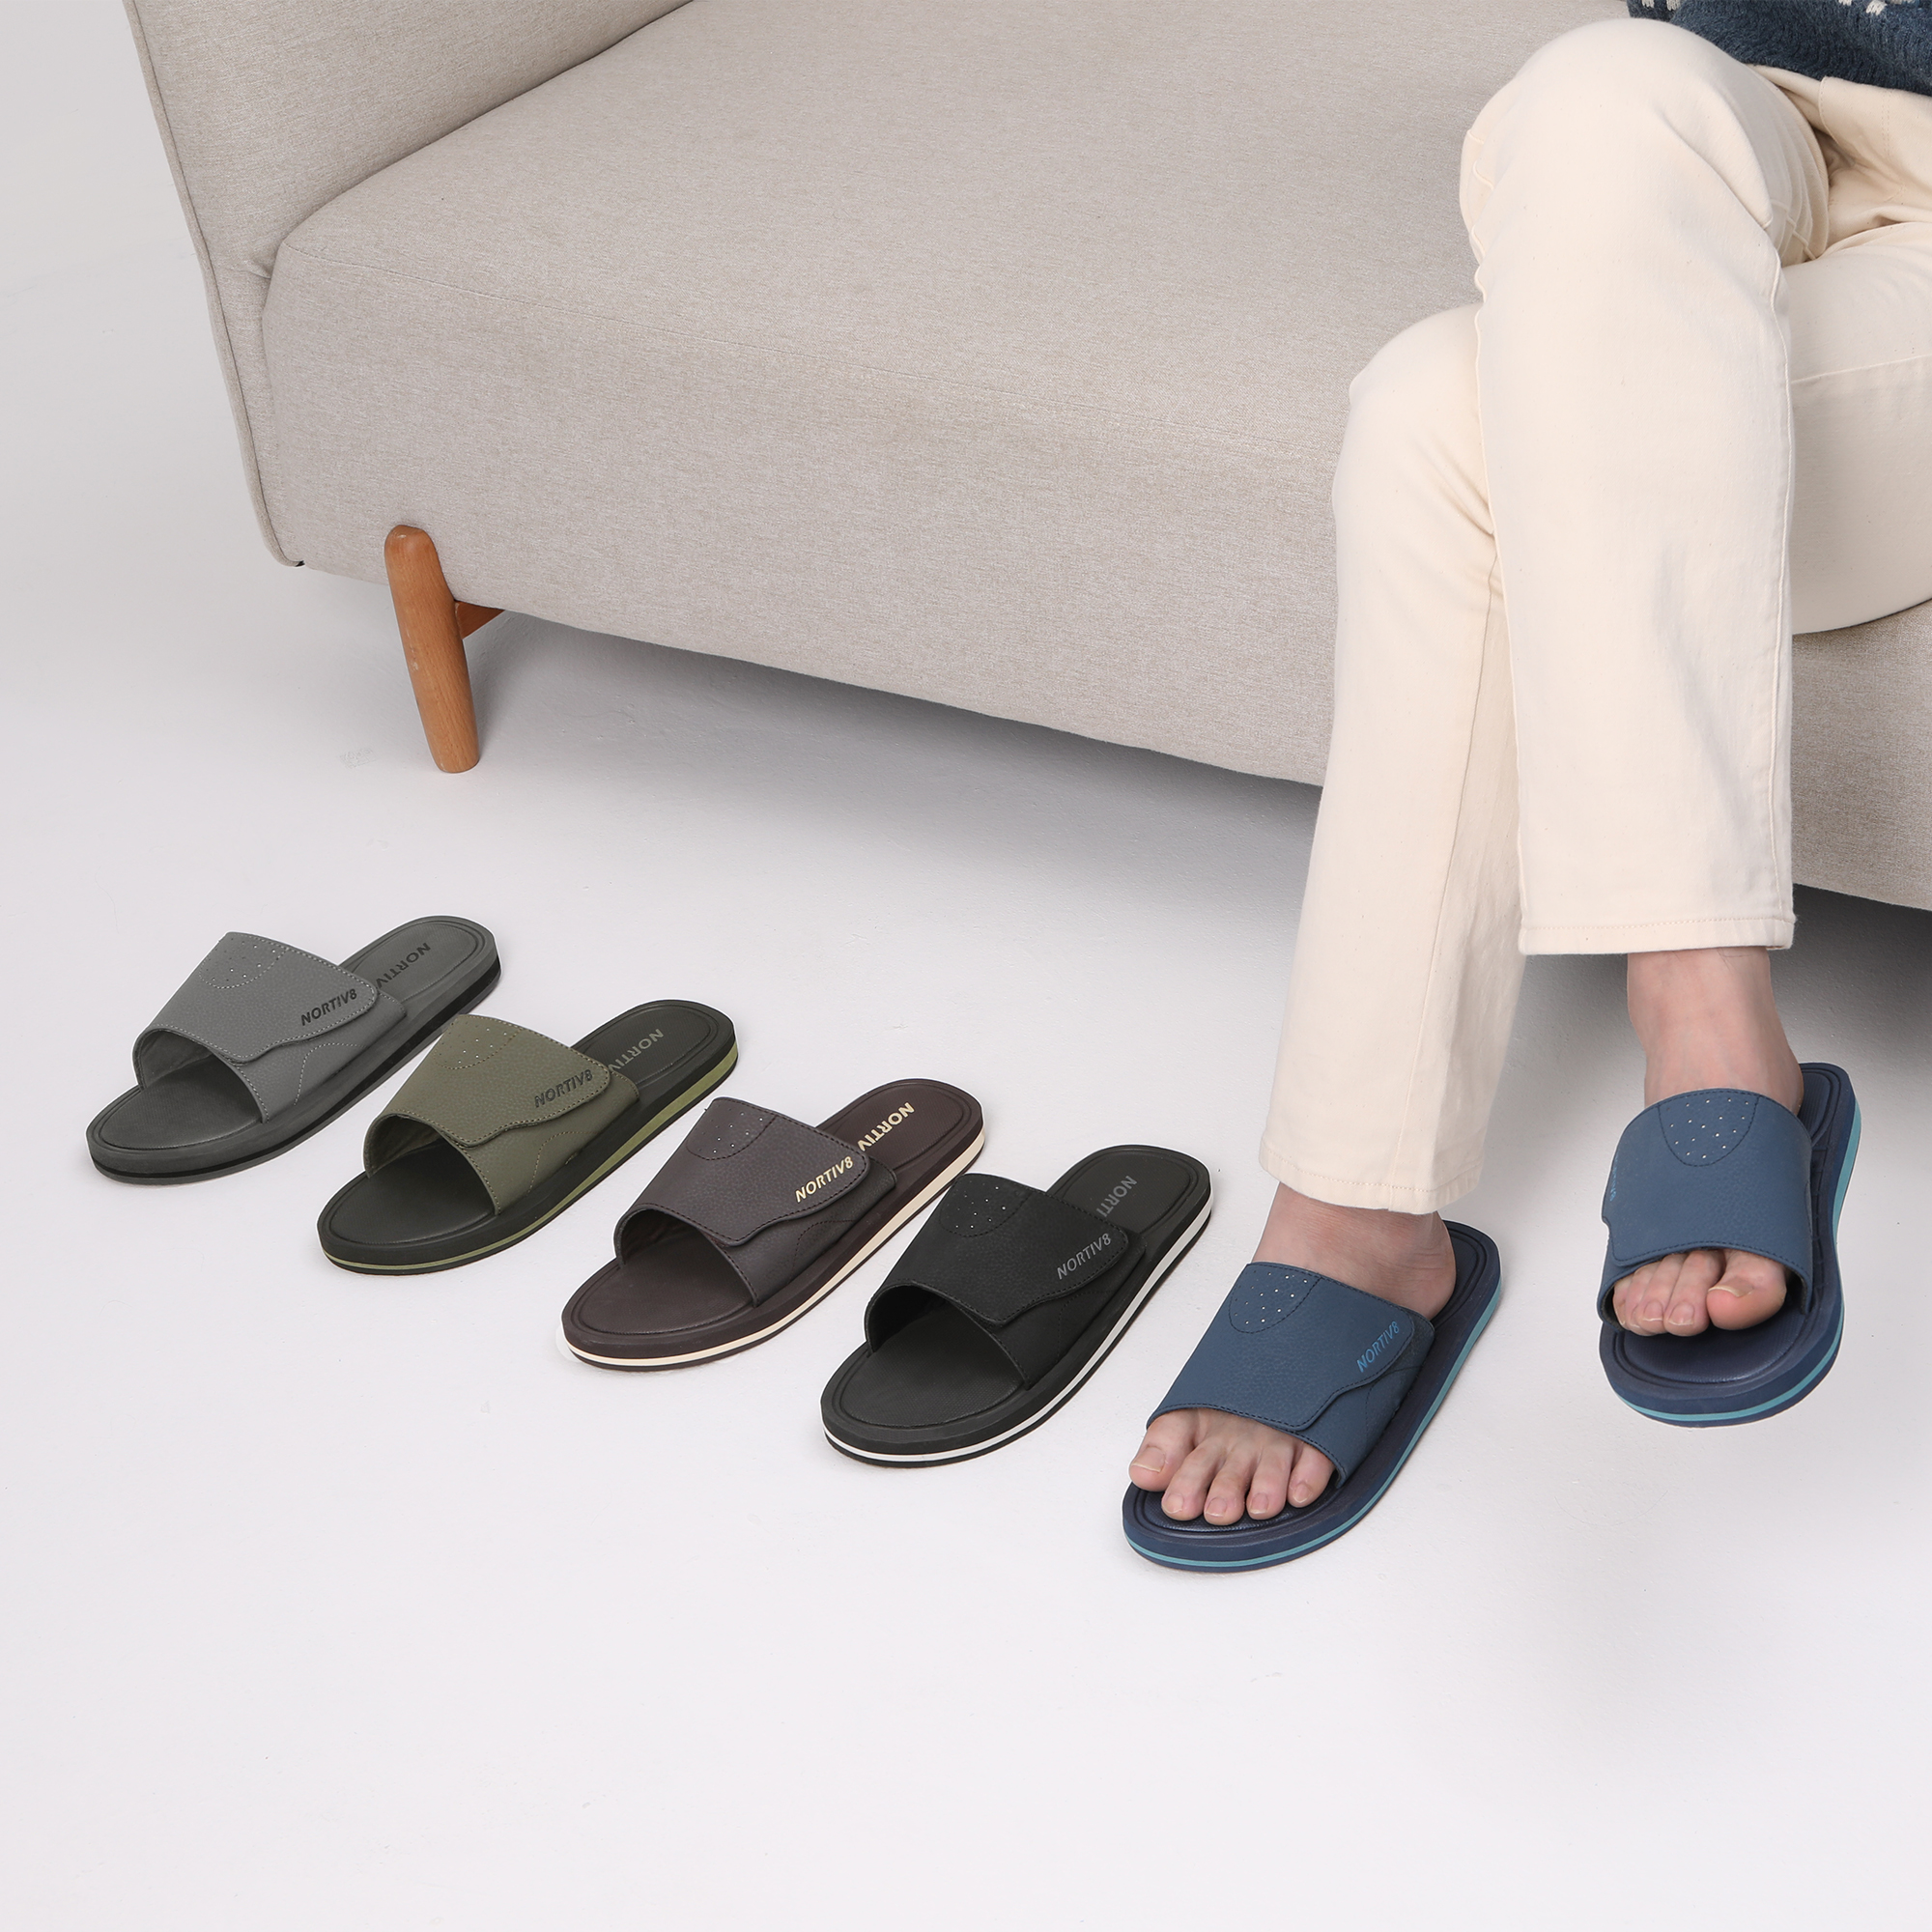 Nortiv8 Men's Memory Foam Adjustable Slide Sandals Comfort Lightweight Summer Beach Sandals Shoes FUSION NAVY Size 15 - image 4 of 5